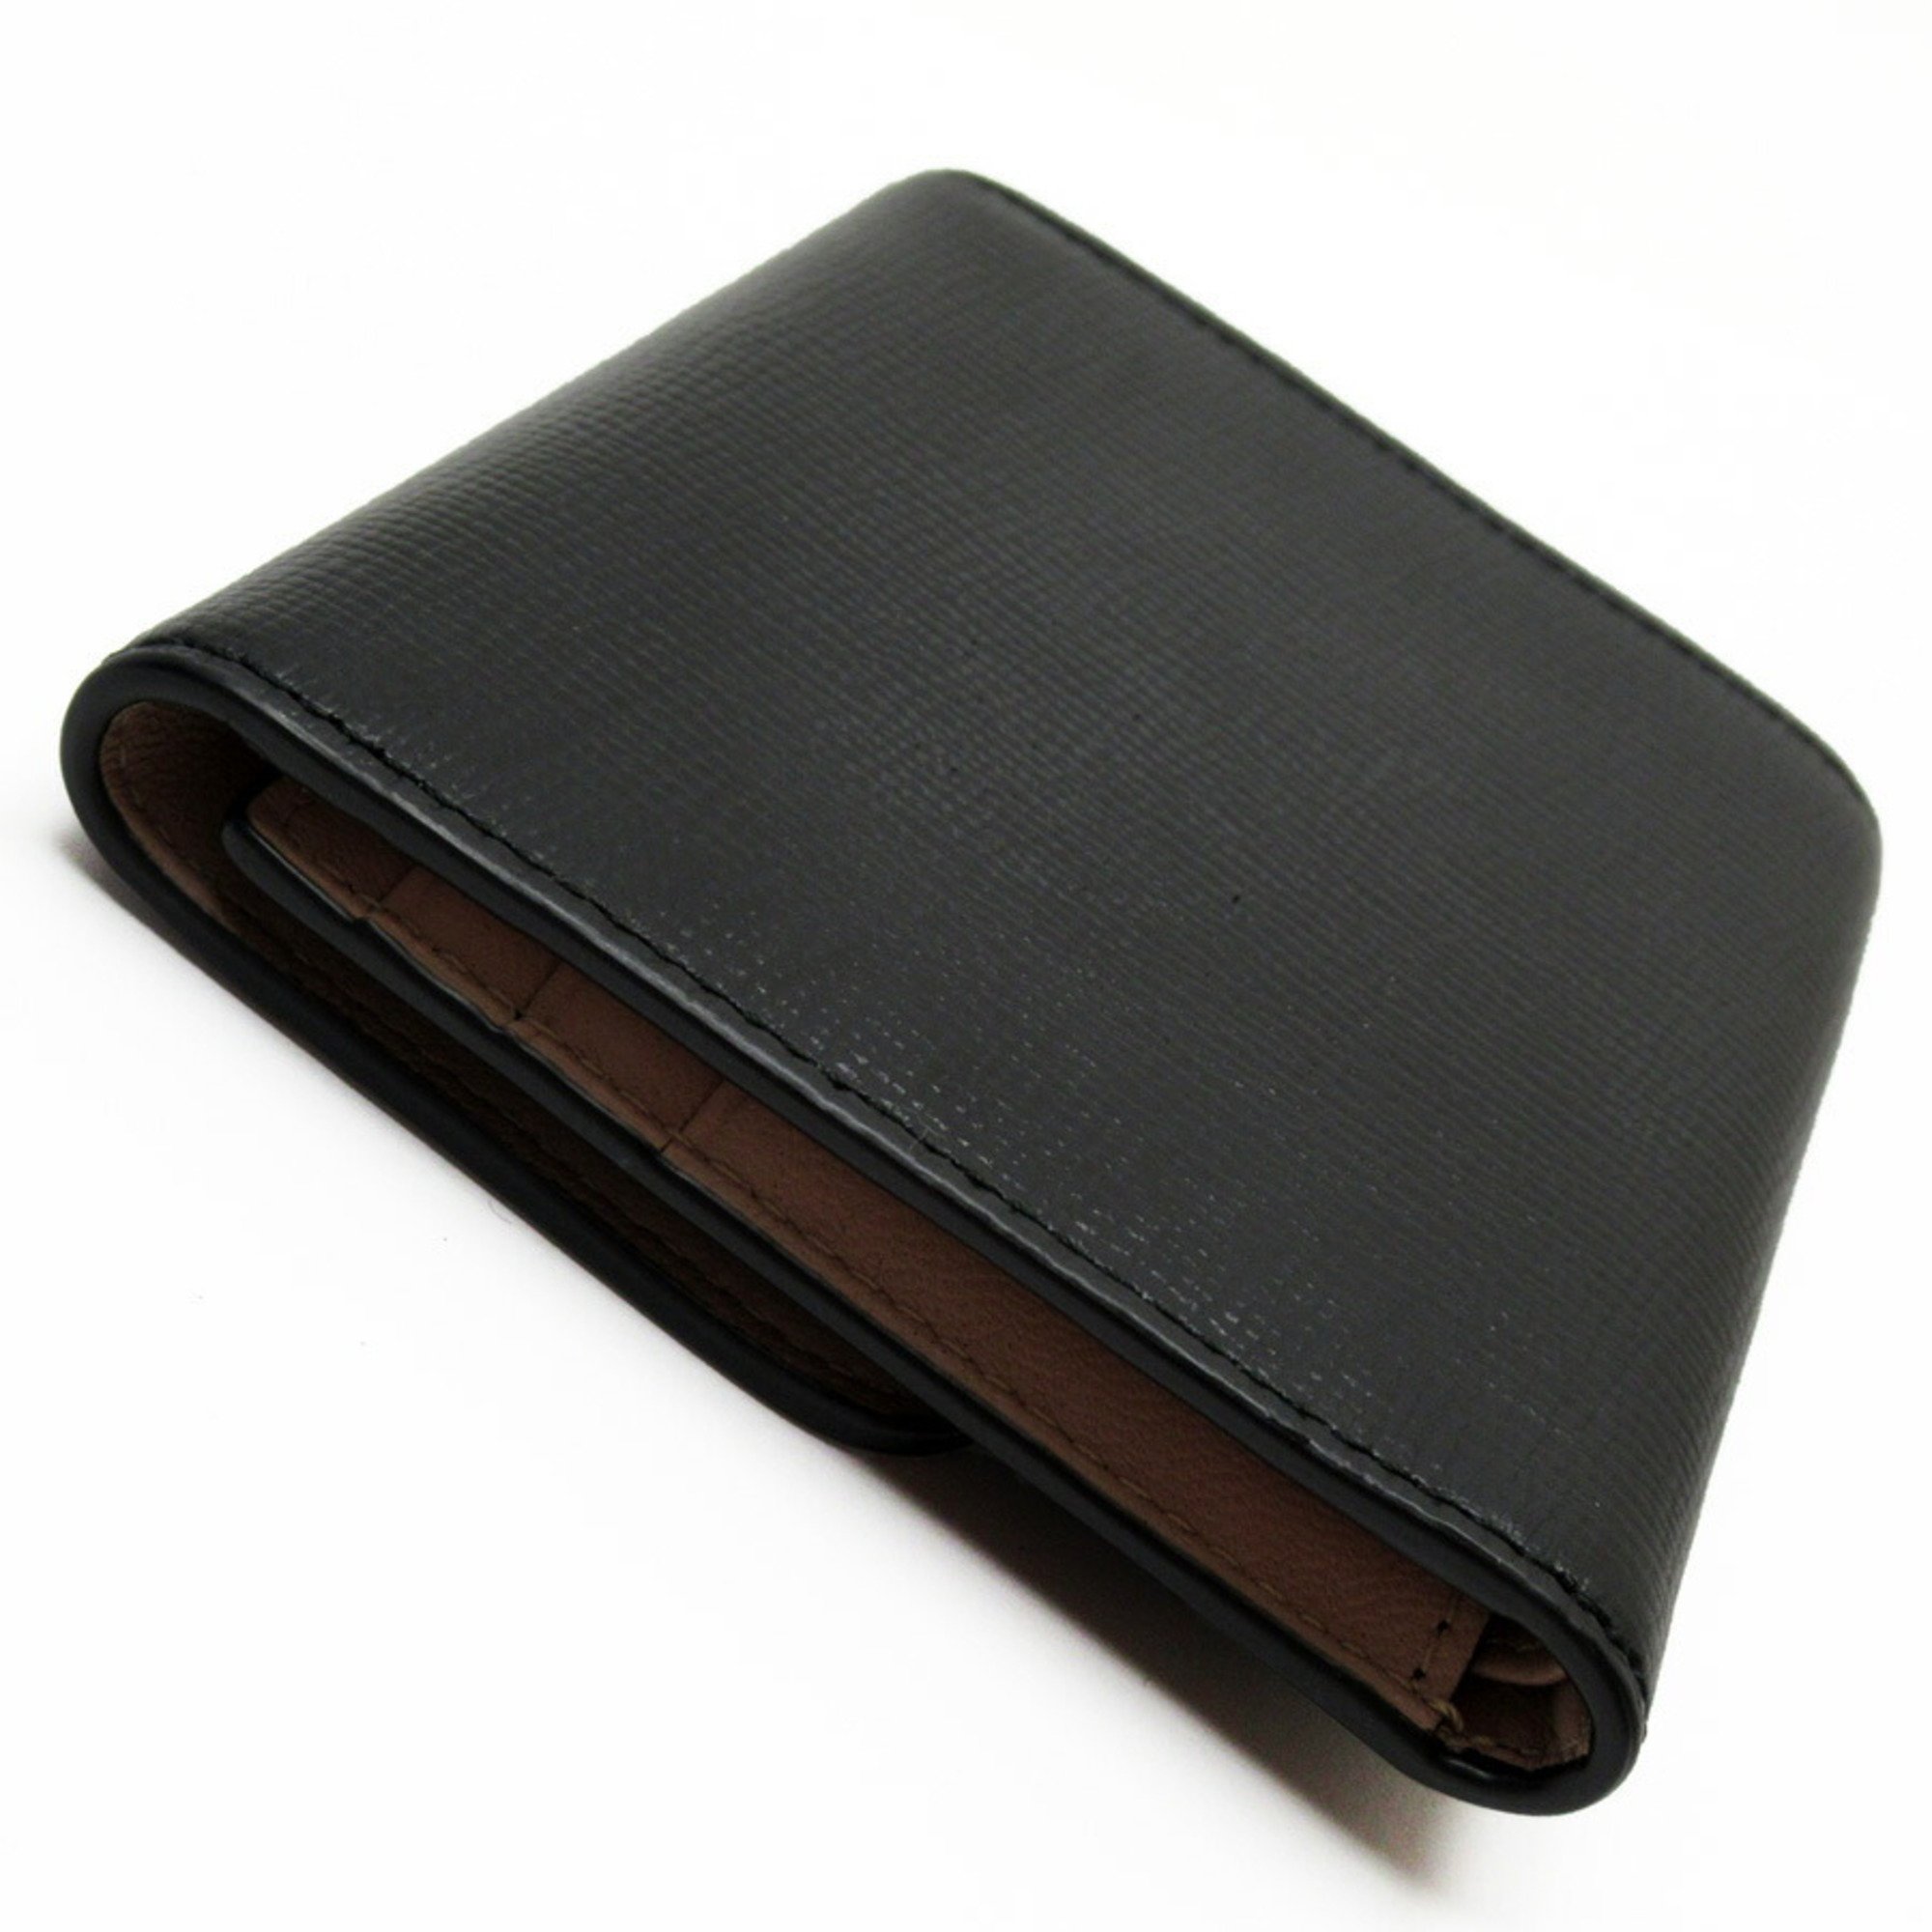 Bally BALLY tri-fold wallet black beige leather